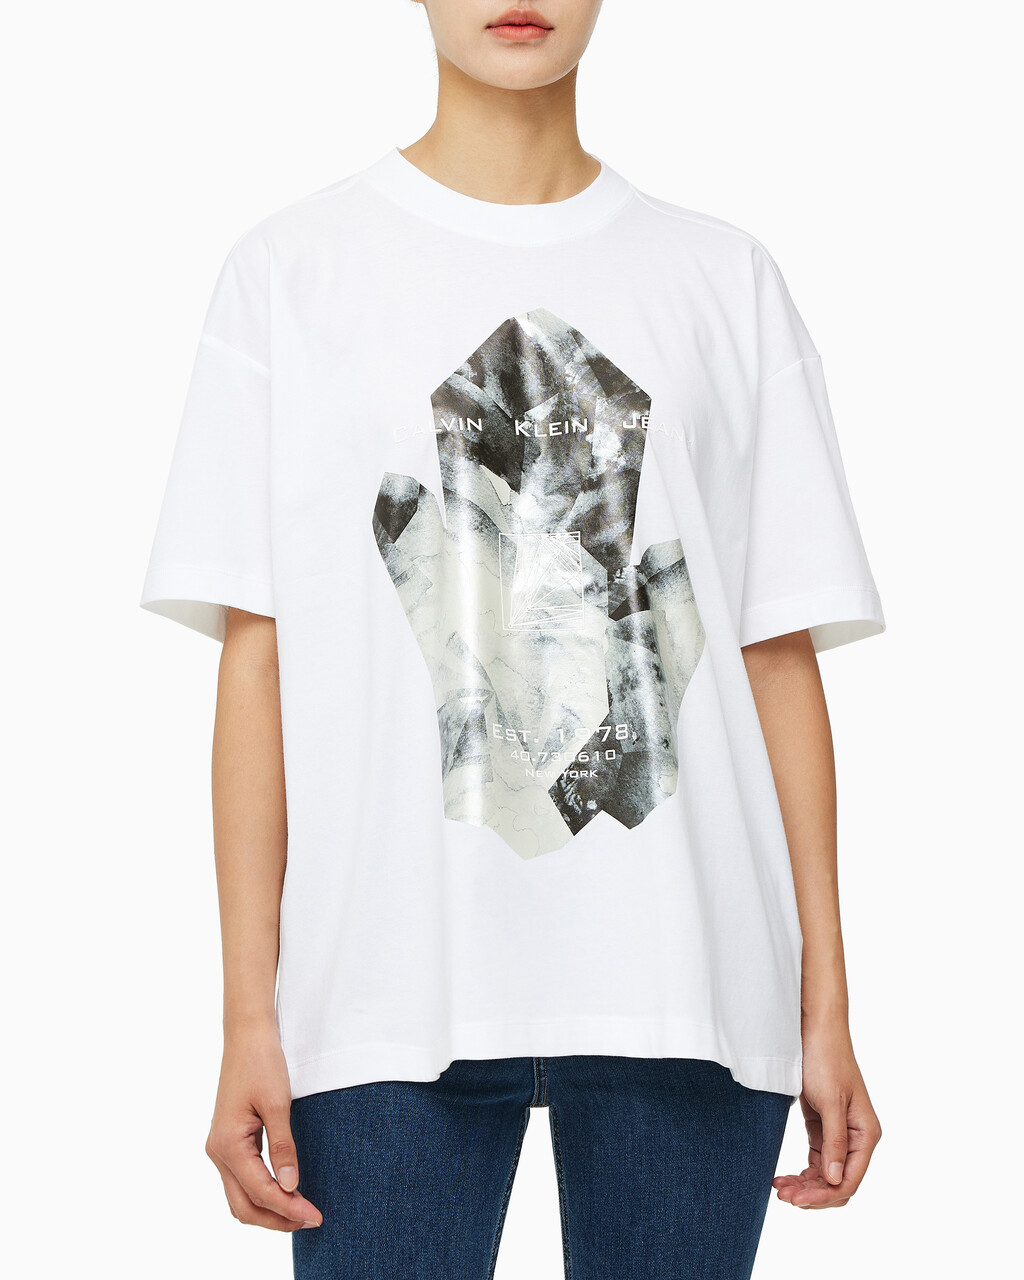 Buy 여성 다이아몬드 그래픽 보이프랜드 티셔츠 in color BRIGHT WHITE